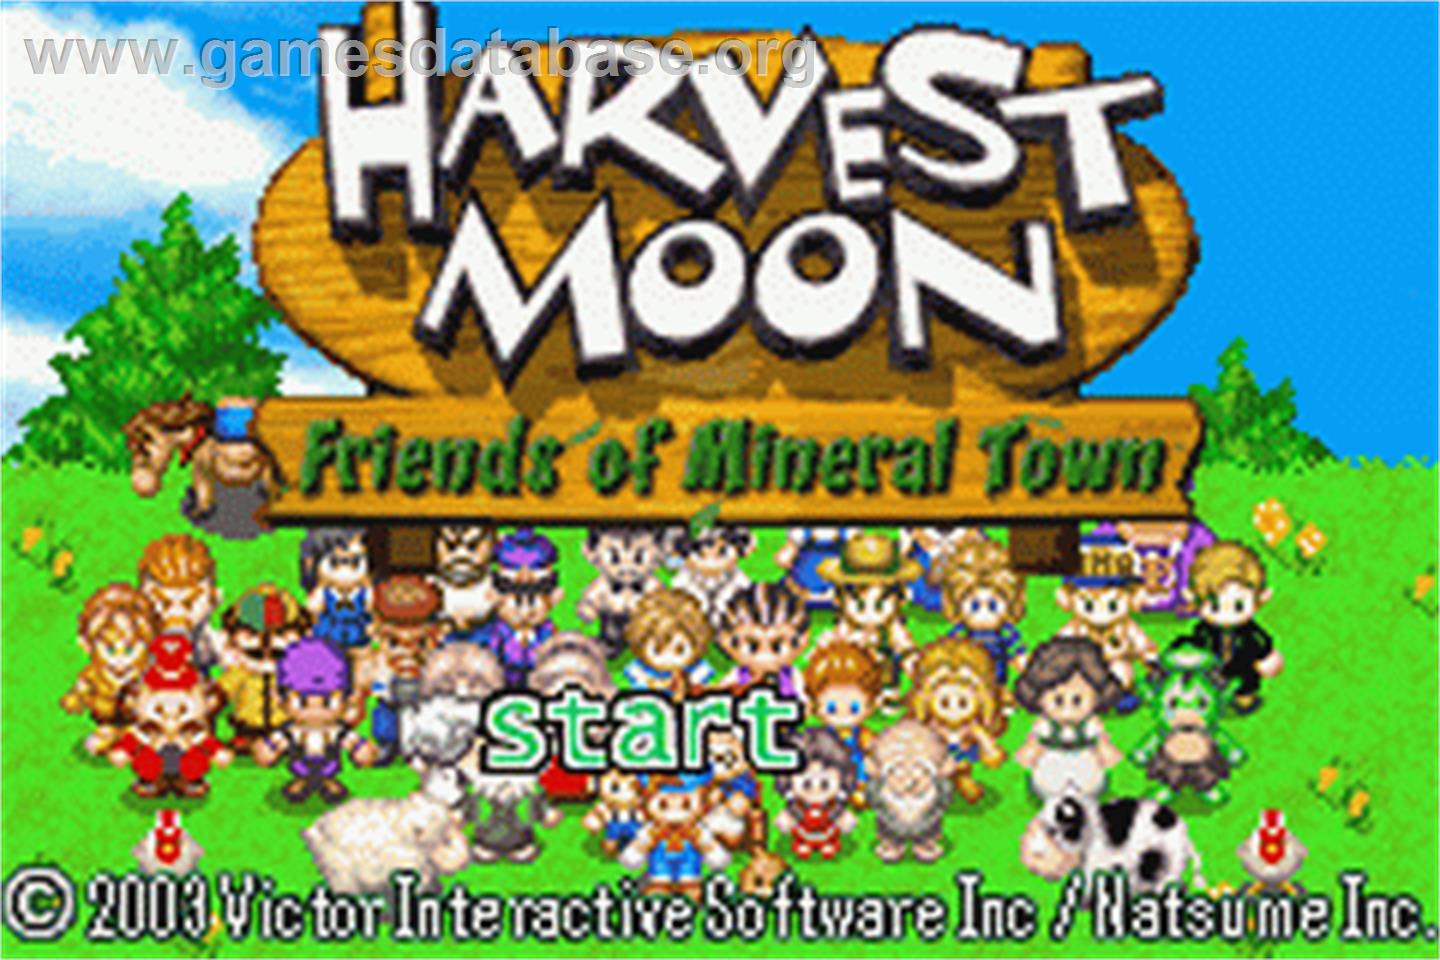 Harvest Moon: Friends of Mineral Town - Nintendo Game Boy Advance - Artwork - Title Screen